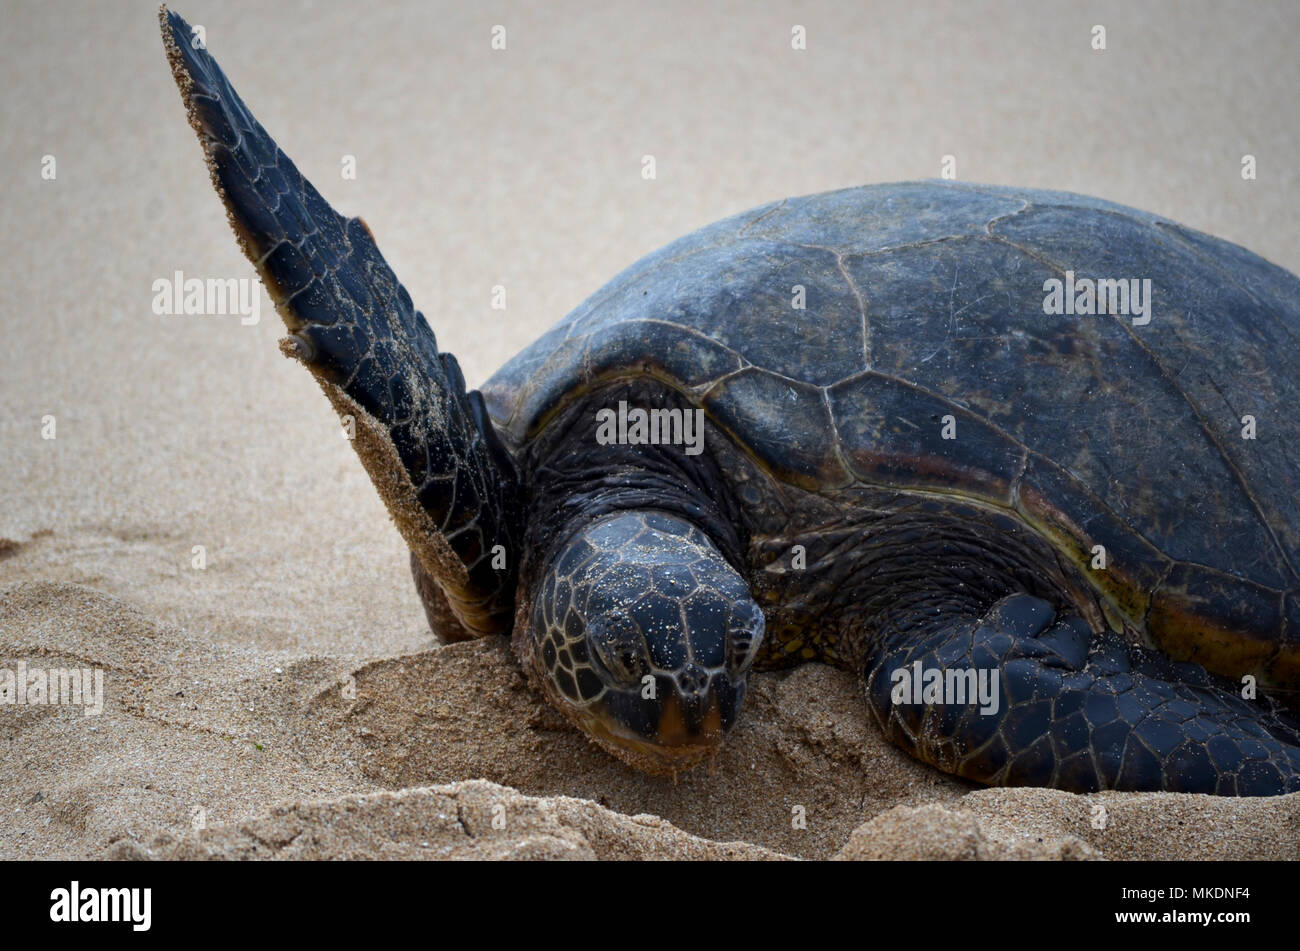 Green sea turtle on beach Stock Photo